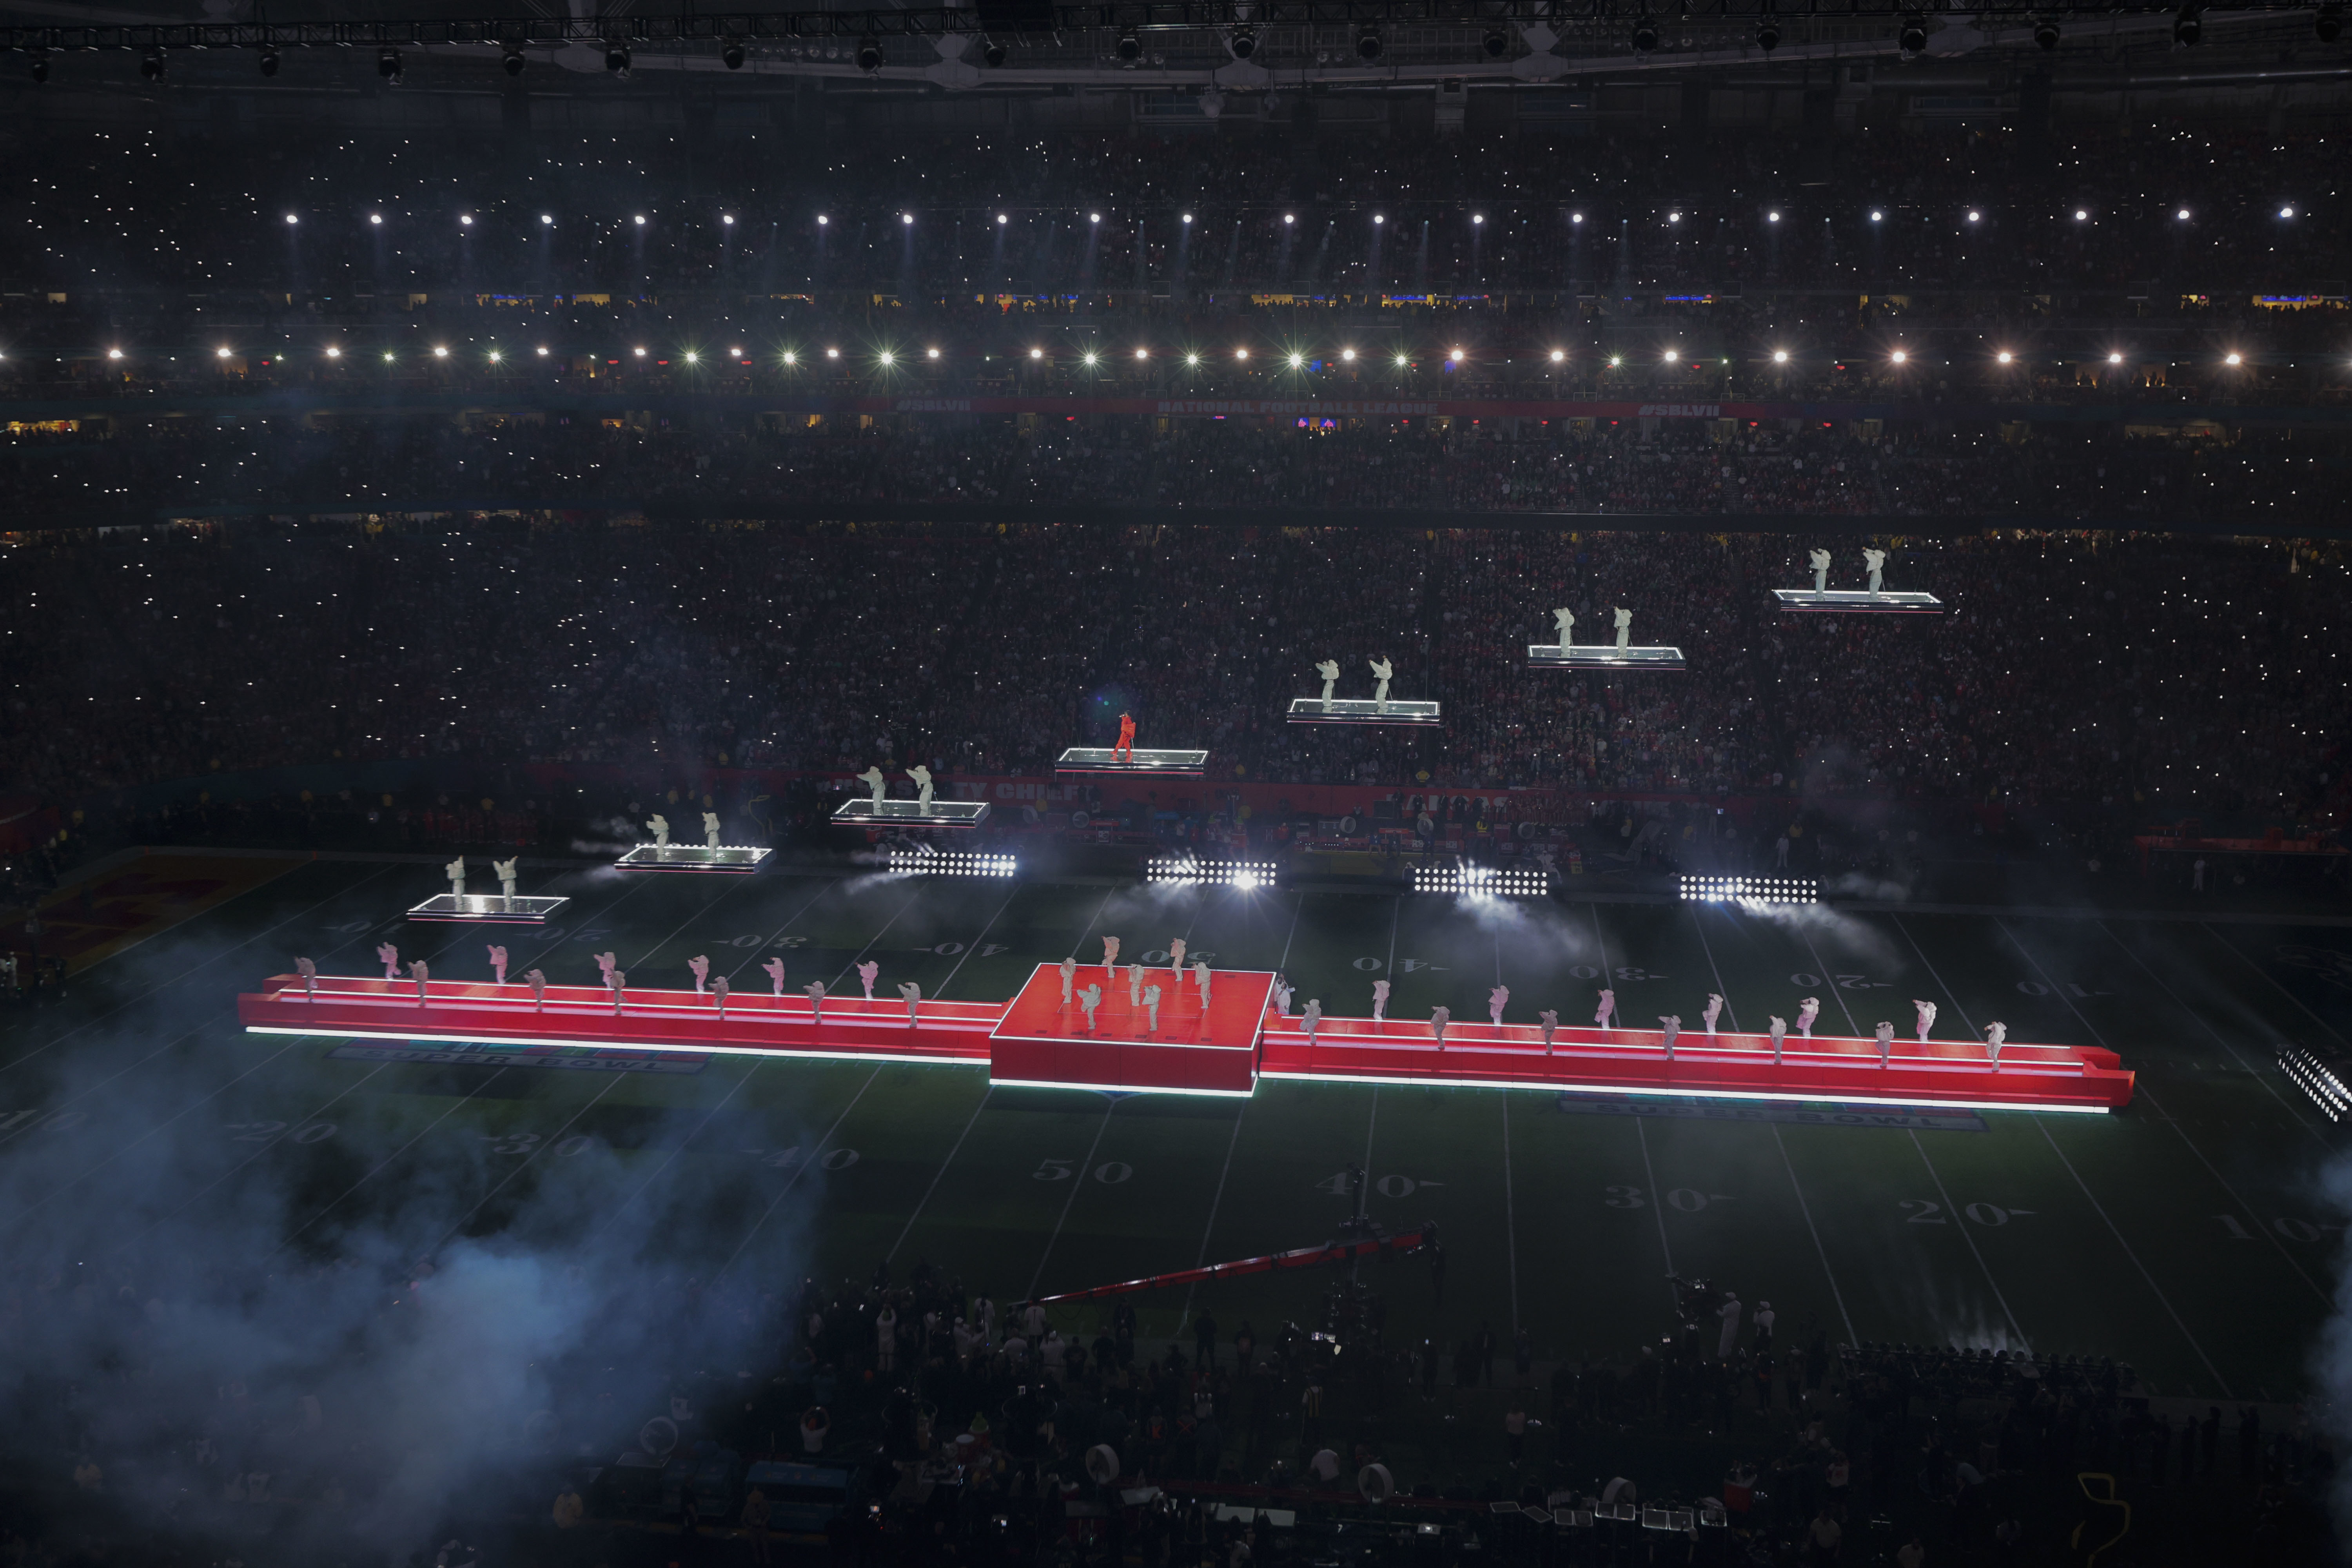 Rihanna Super Bowl Halftime Show 2023: Everything we know so far